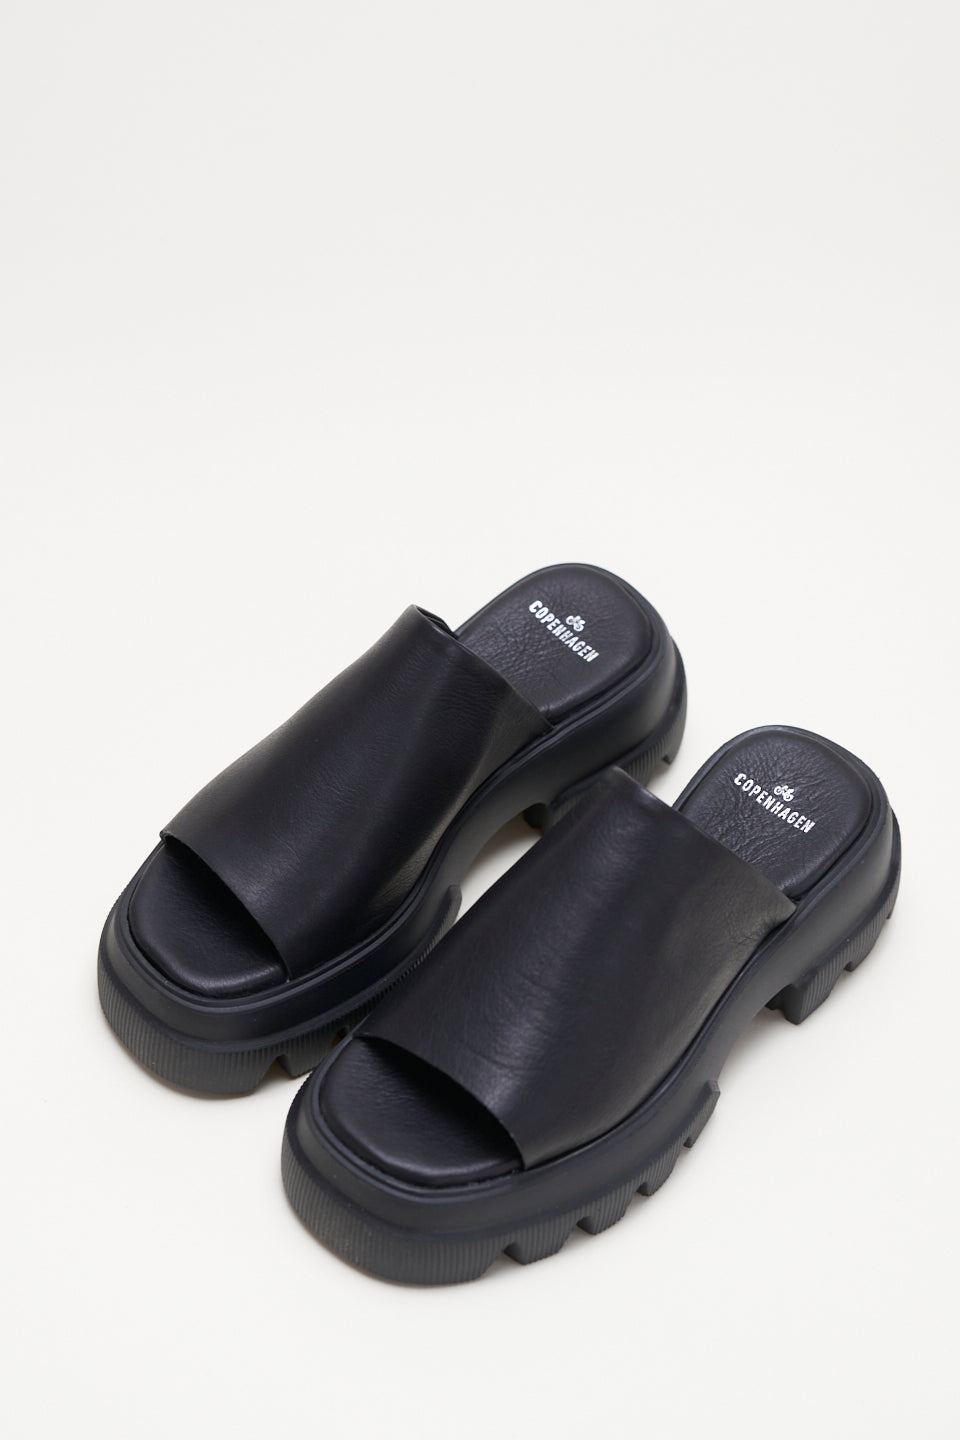 Vitello Black Chunky Slides Sandals CPH231BLACK - 3